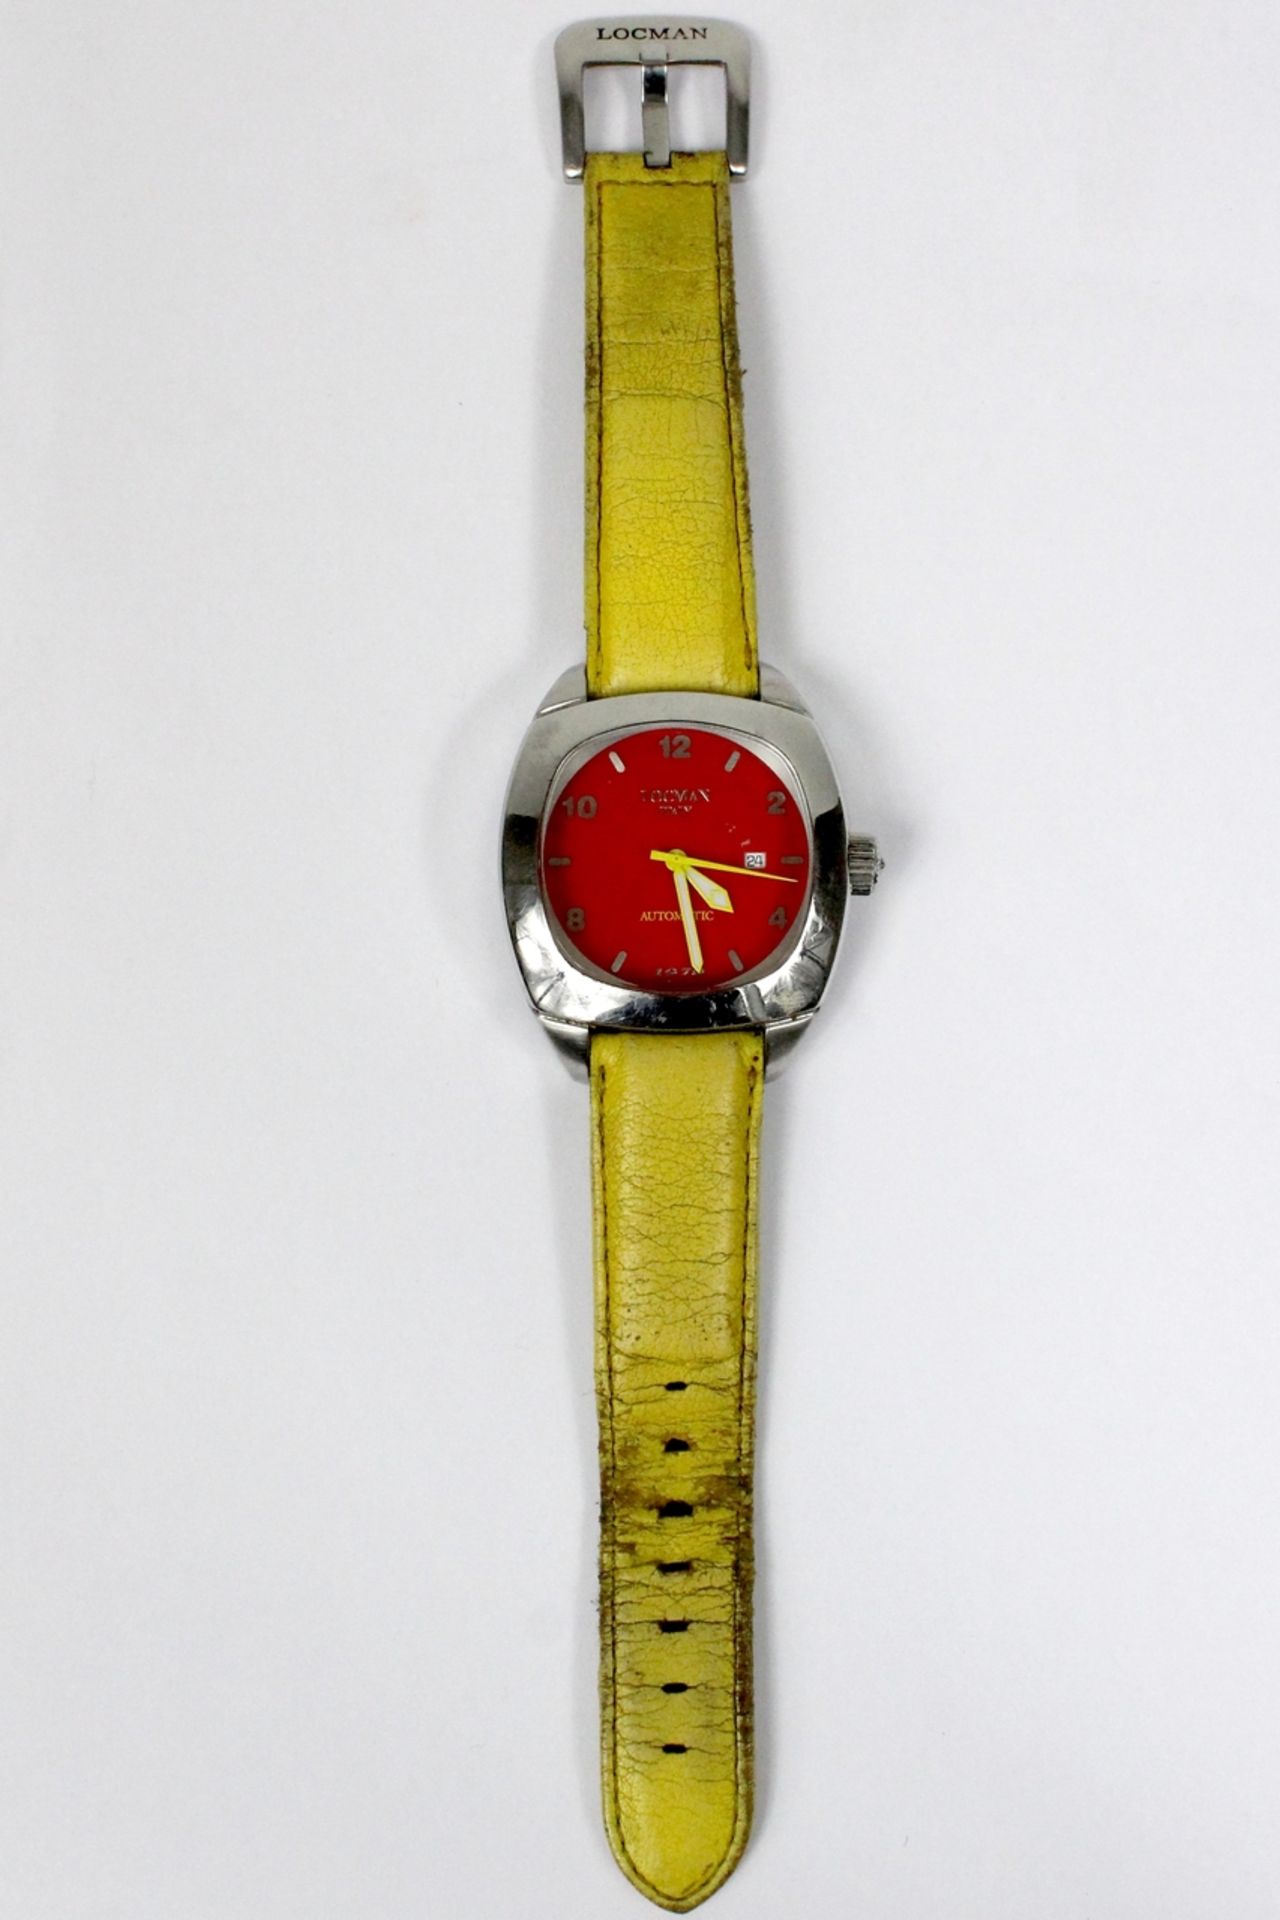 Locman Italy Automatic 1970 Armbanduhr